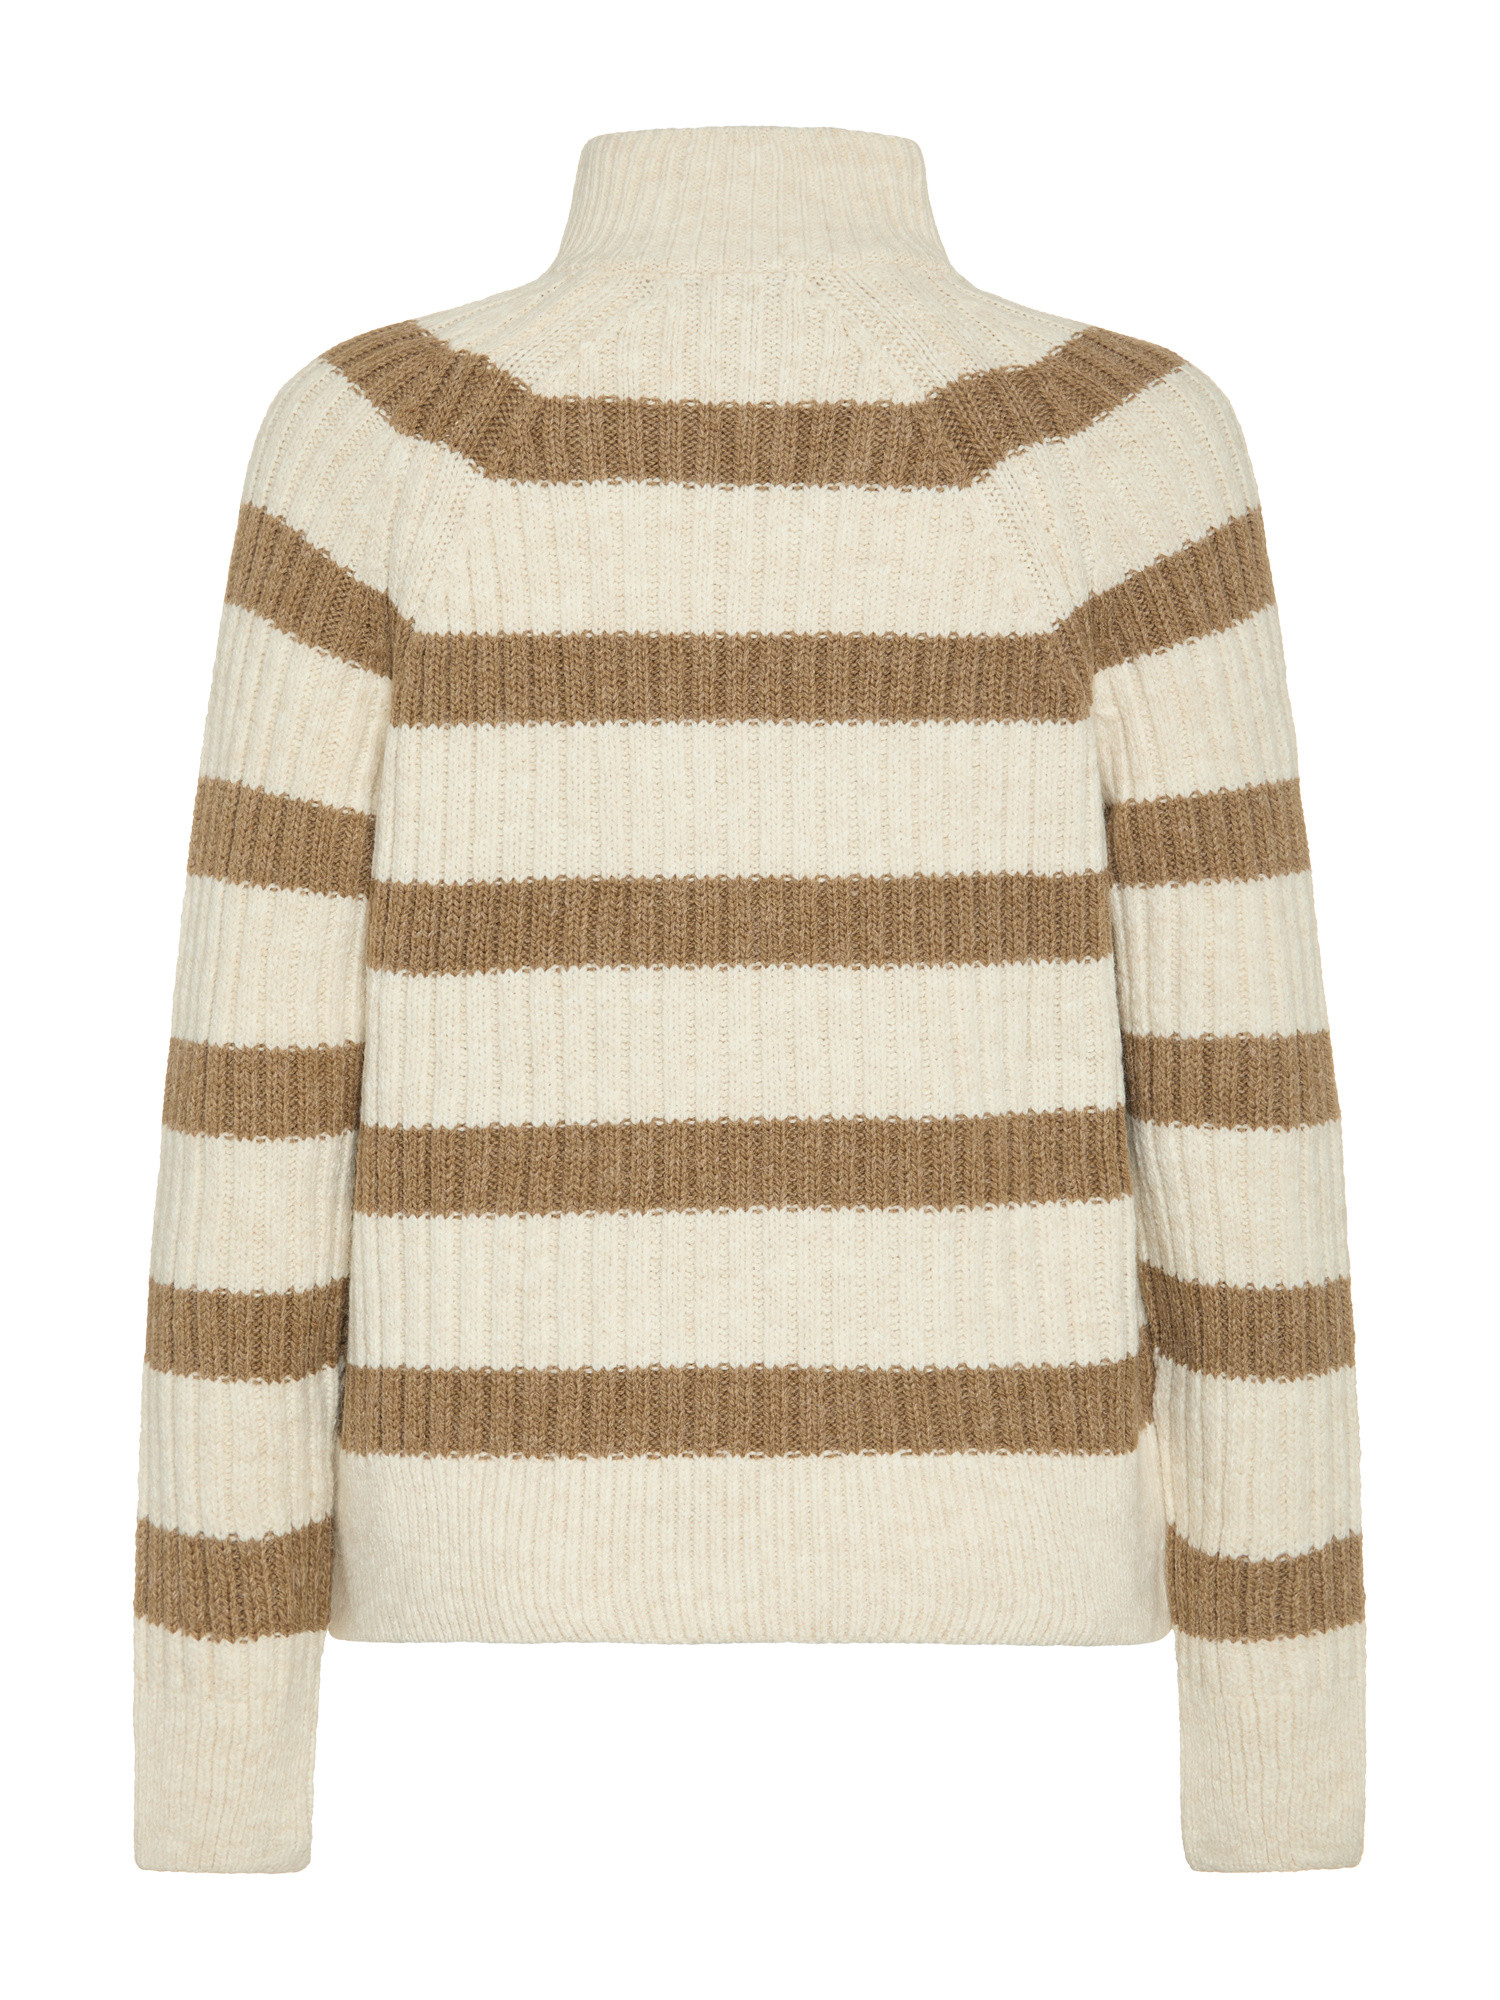 Only - Striped half-zip pullover, Beige, large image number 1